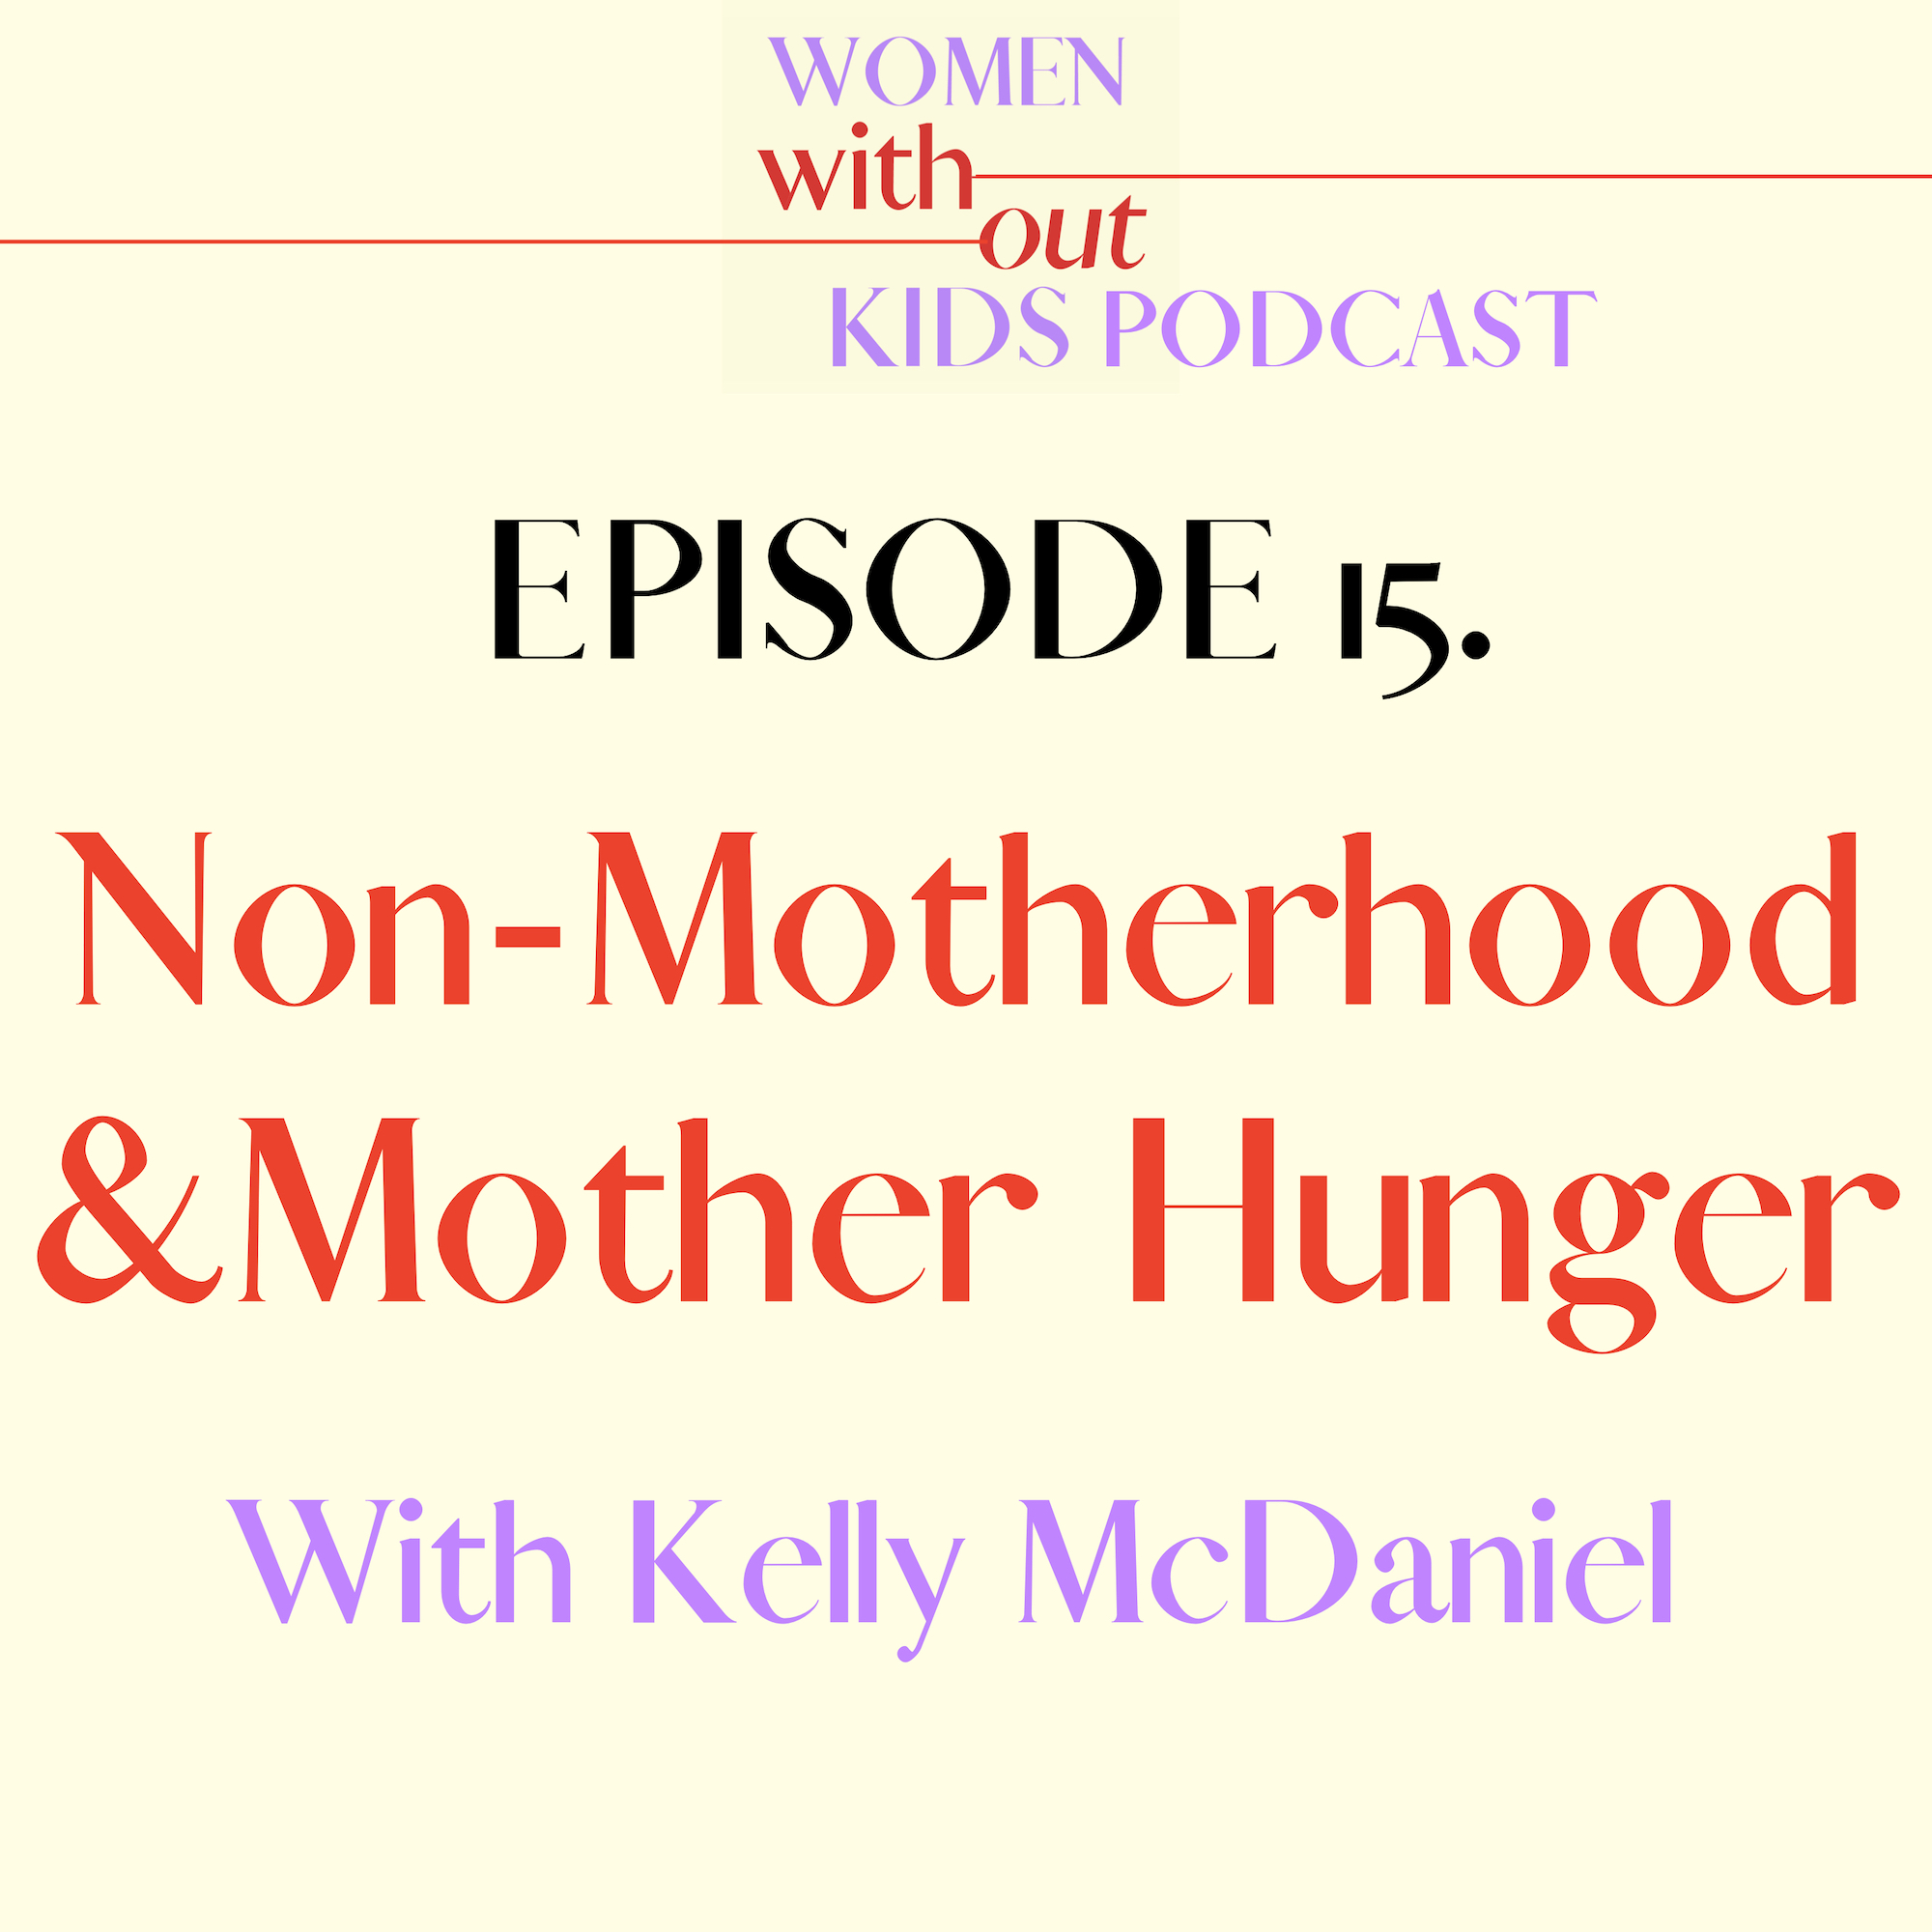 kelly mcdaniel mother hunger women without kids ruby warrington